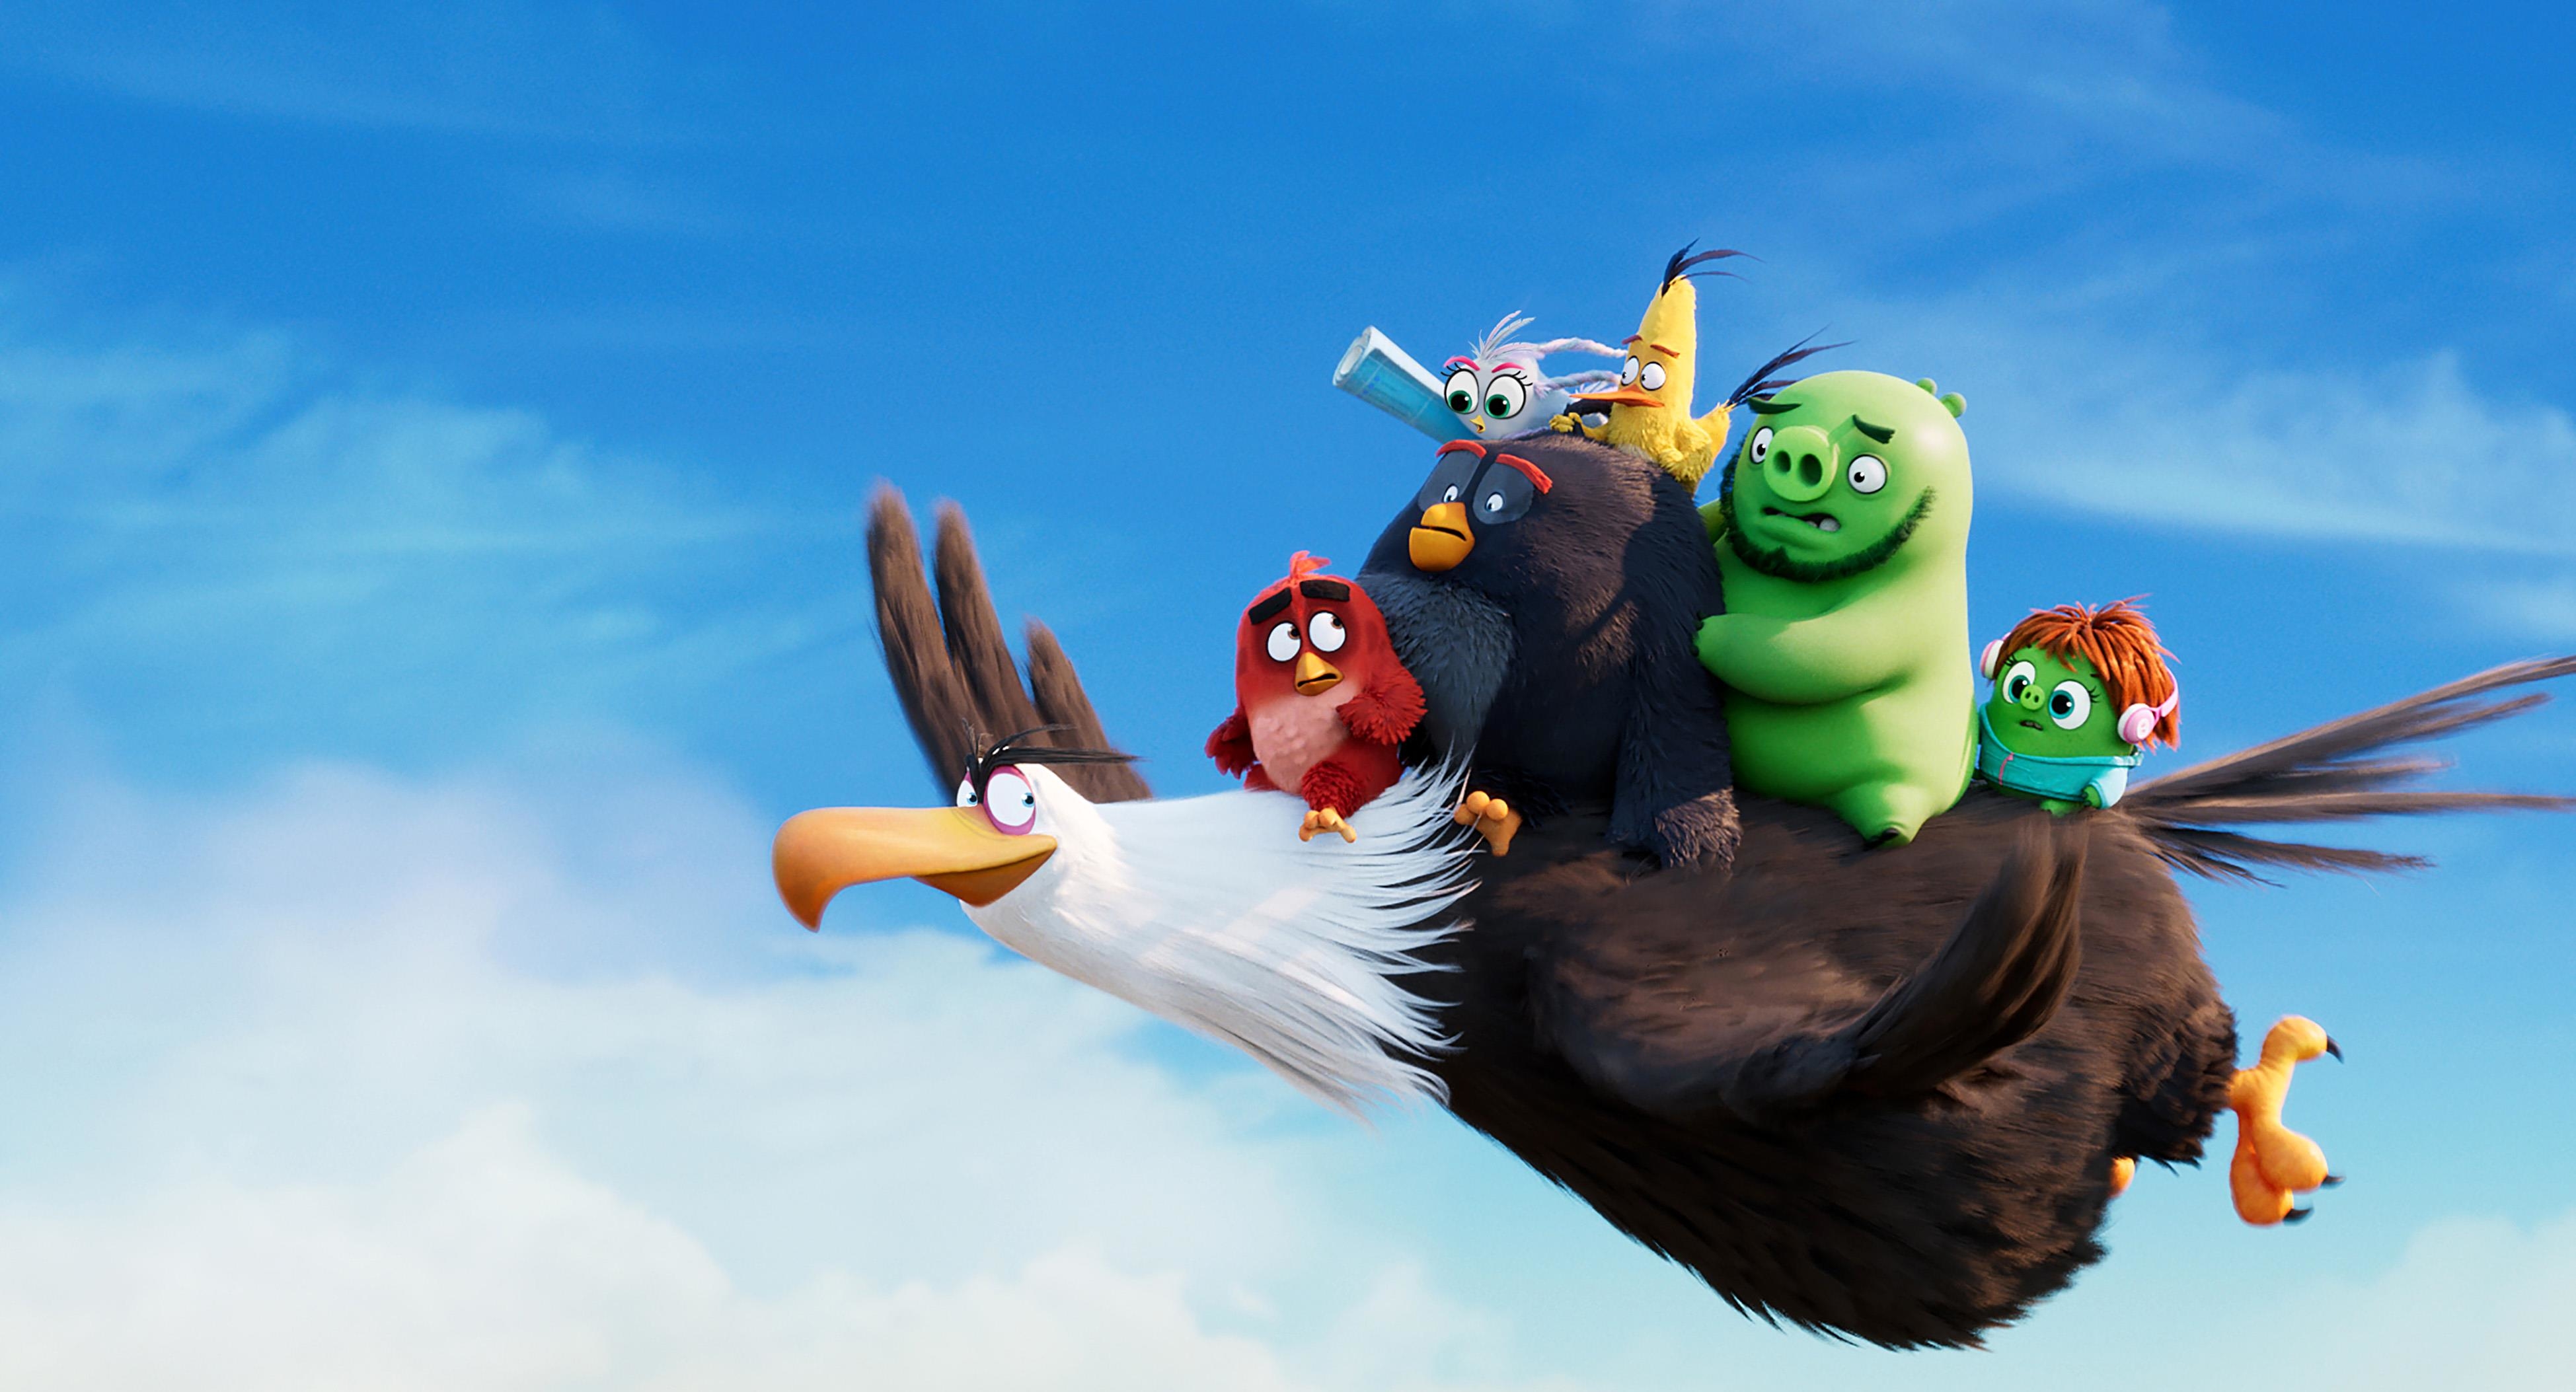 Image du film Angry Birds : copains comme cochons 67dff46d-3eab-41c8-b37a-be7005249c51